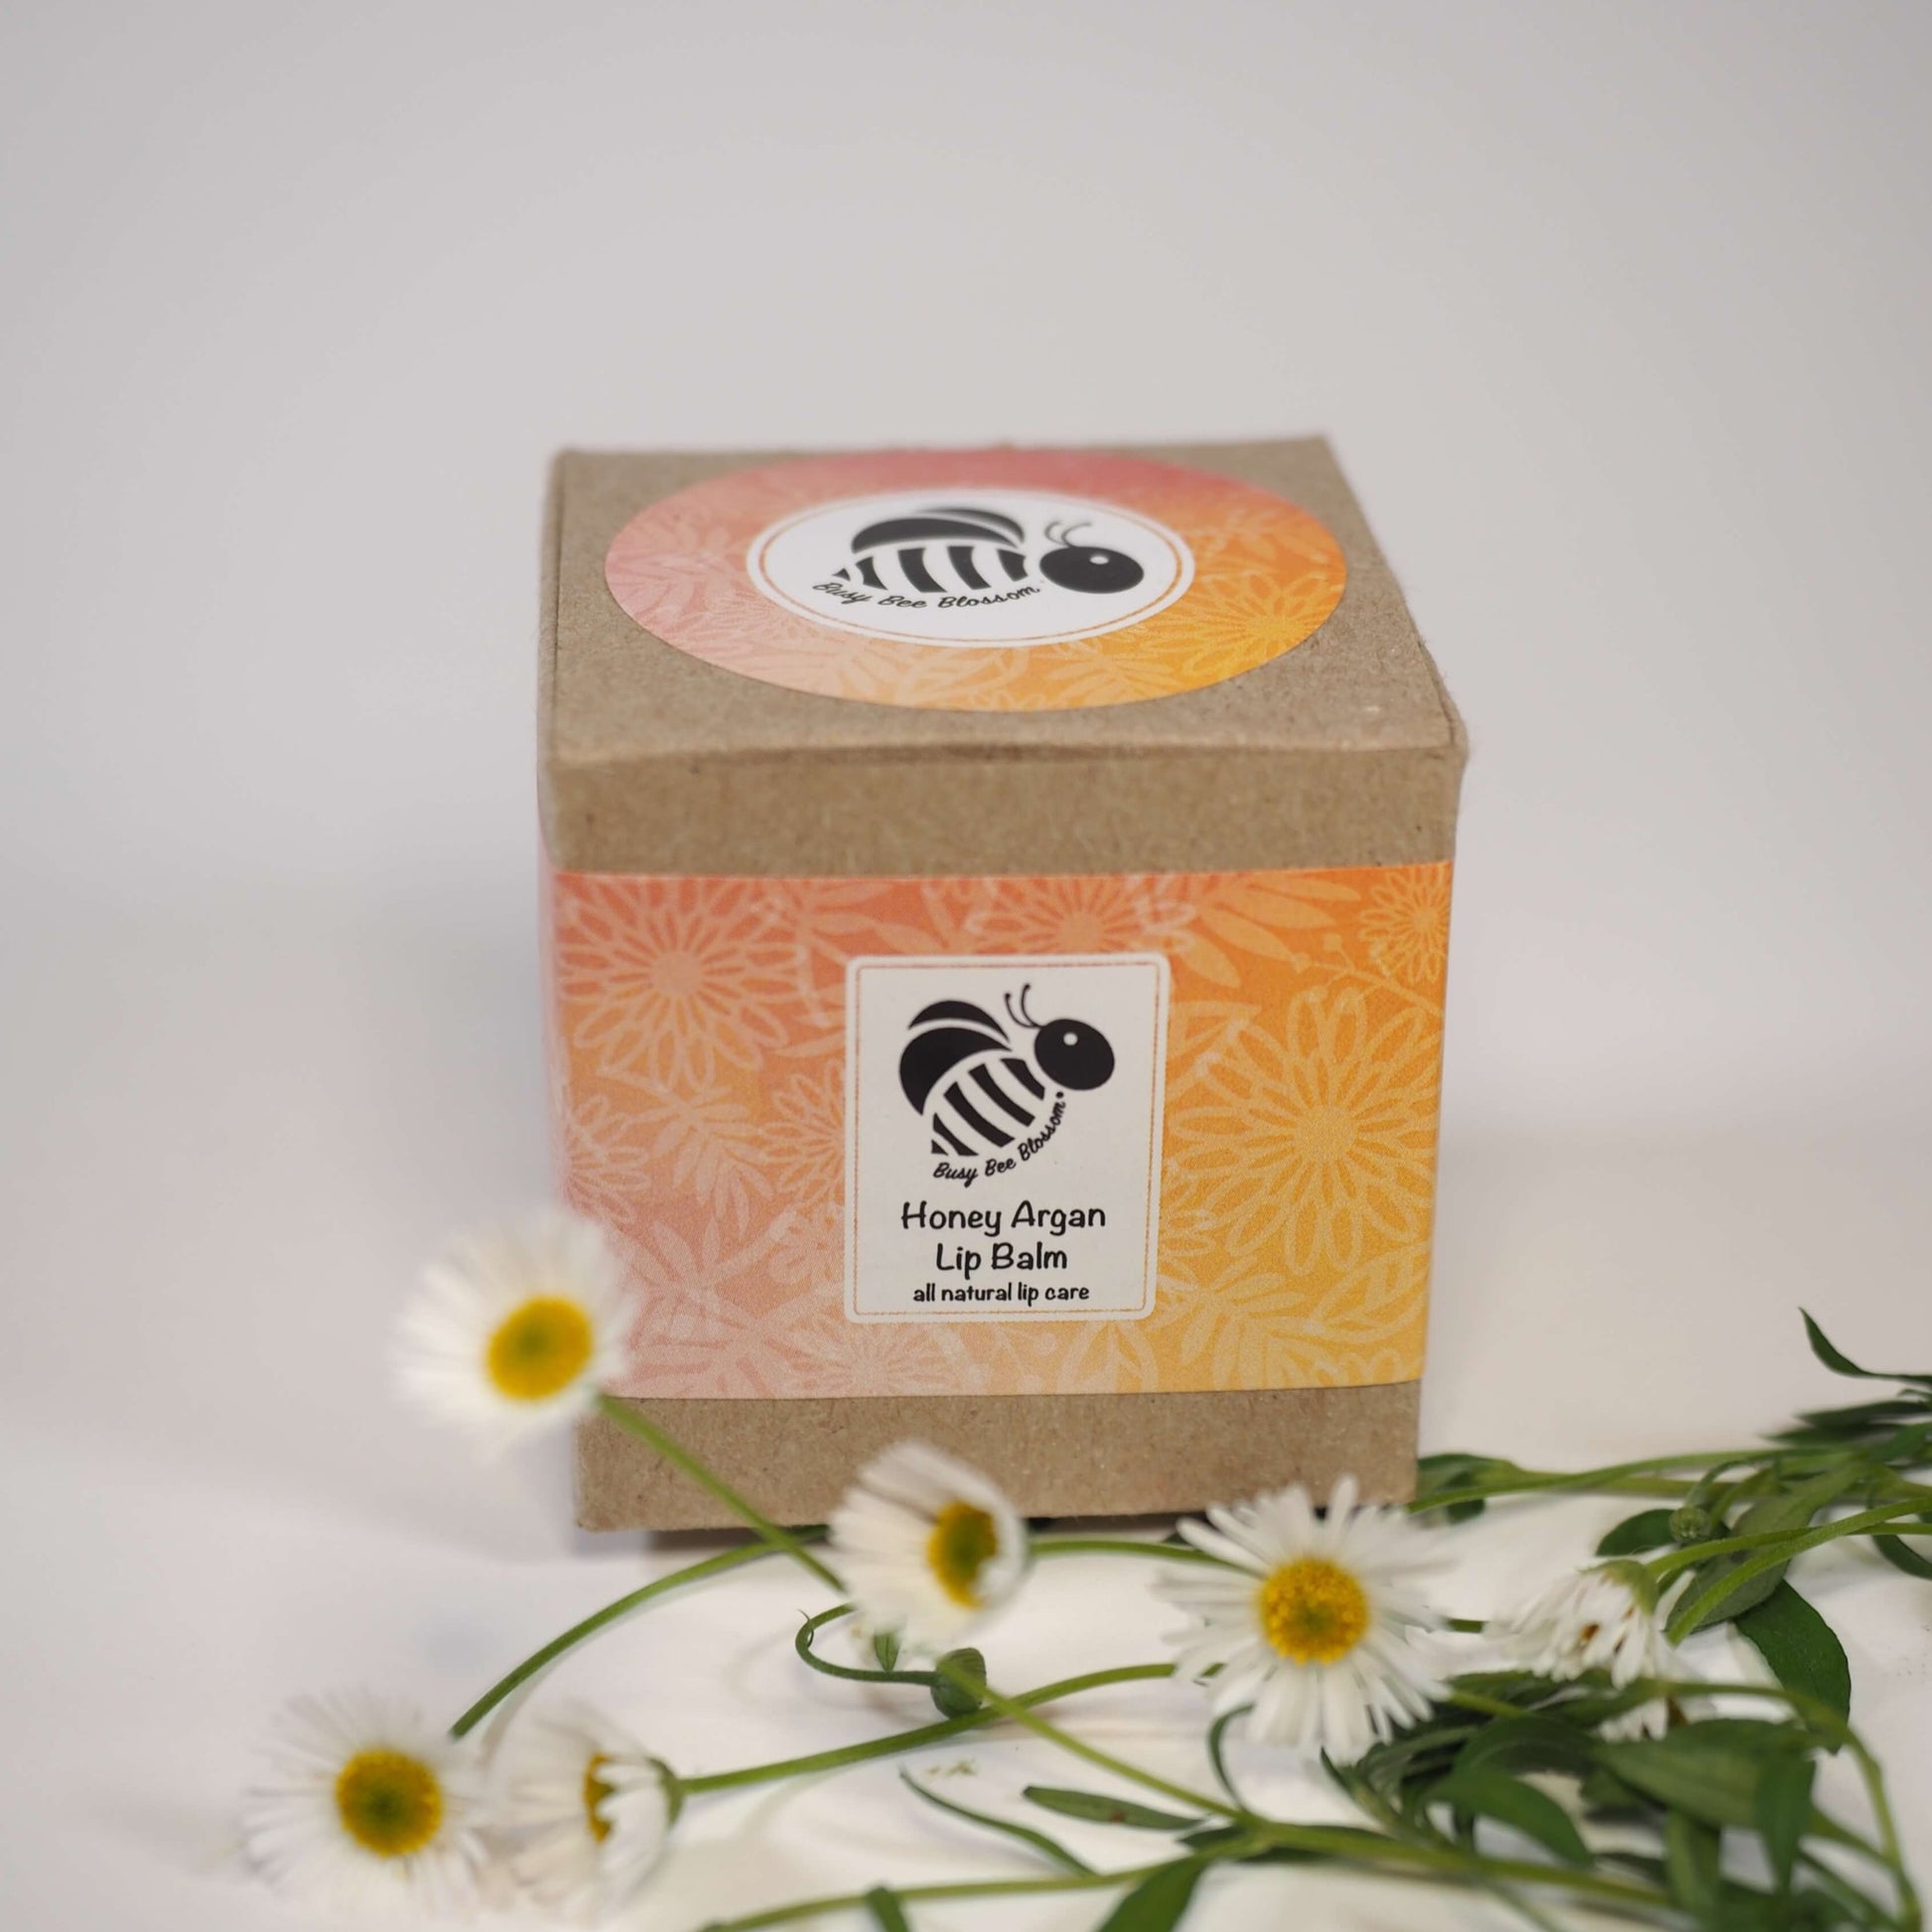 Honey Argan Lip Balm packaging and daisies